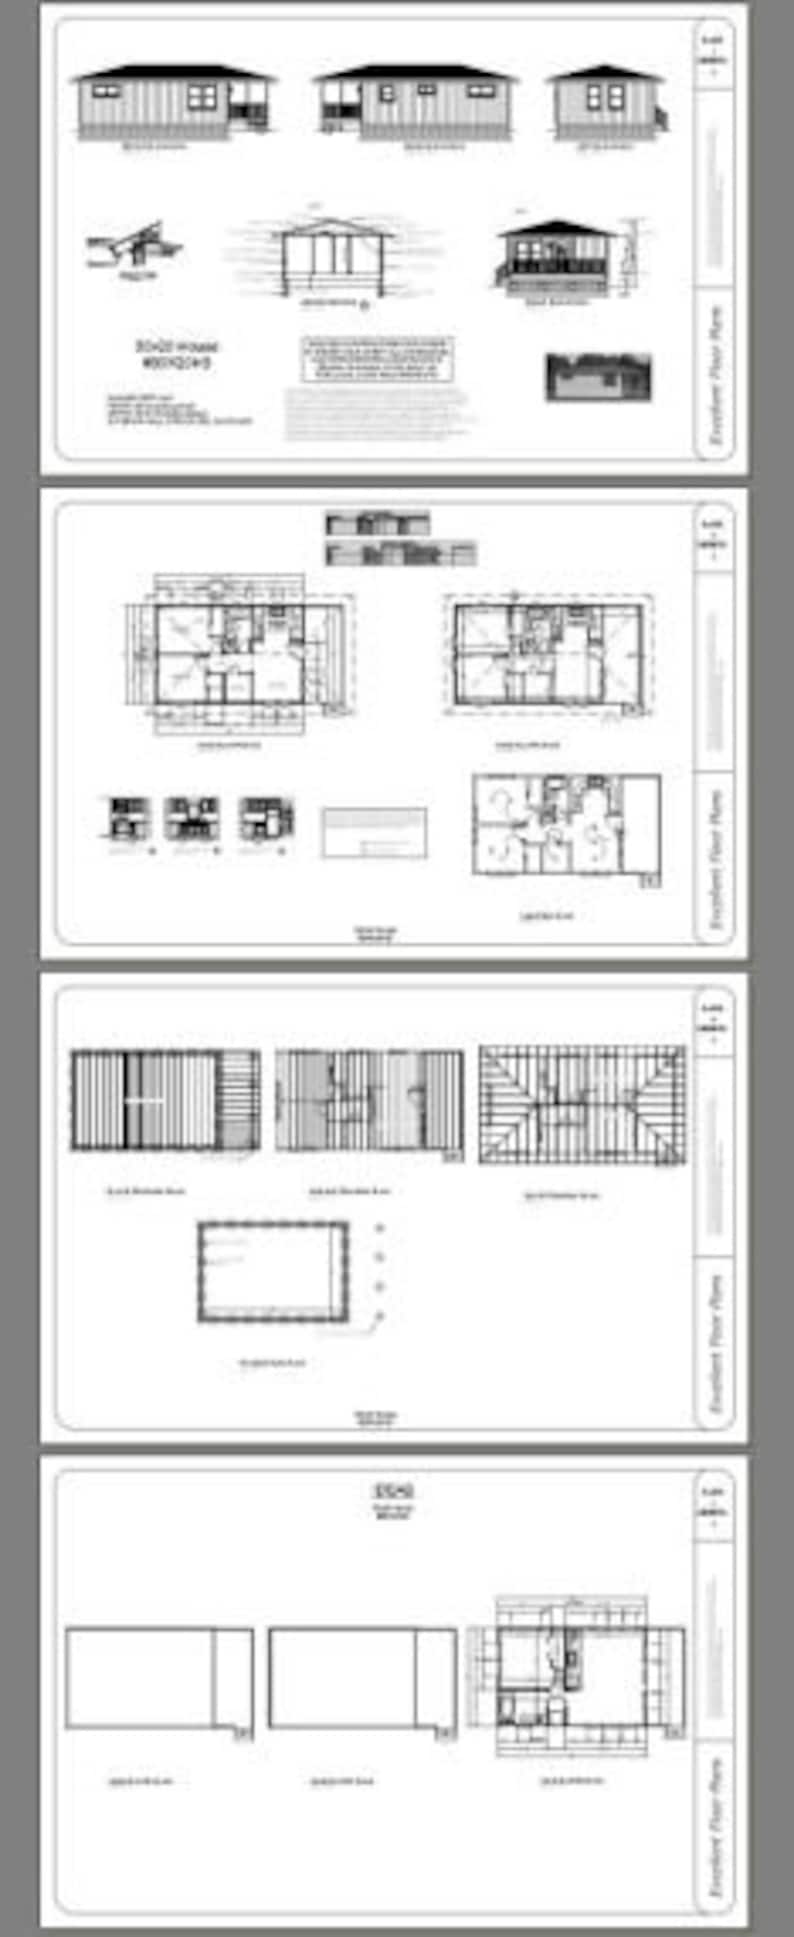 30x20 House 2-Bedroom 1-Bath 600 sq ft PDF Floor Plan | Etsy